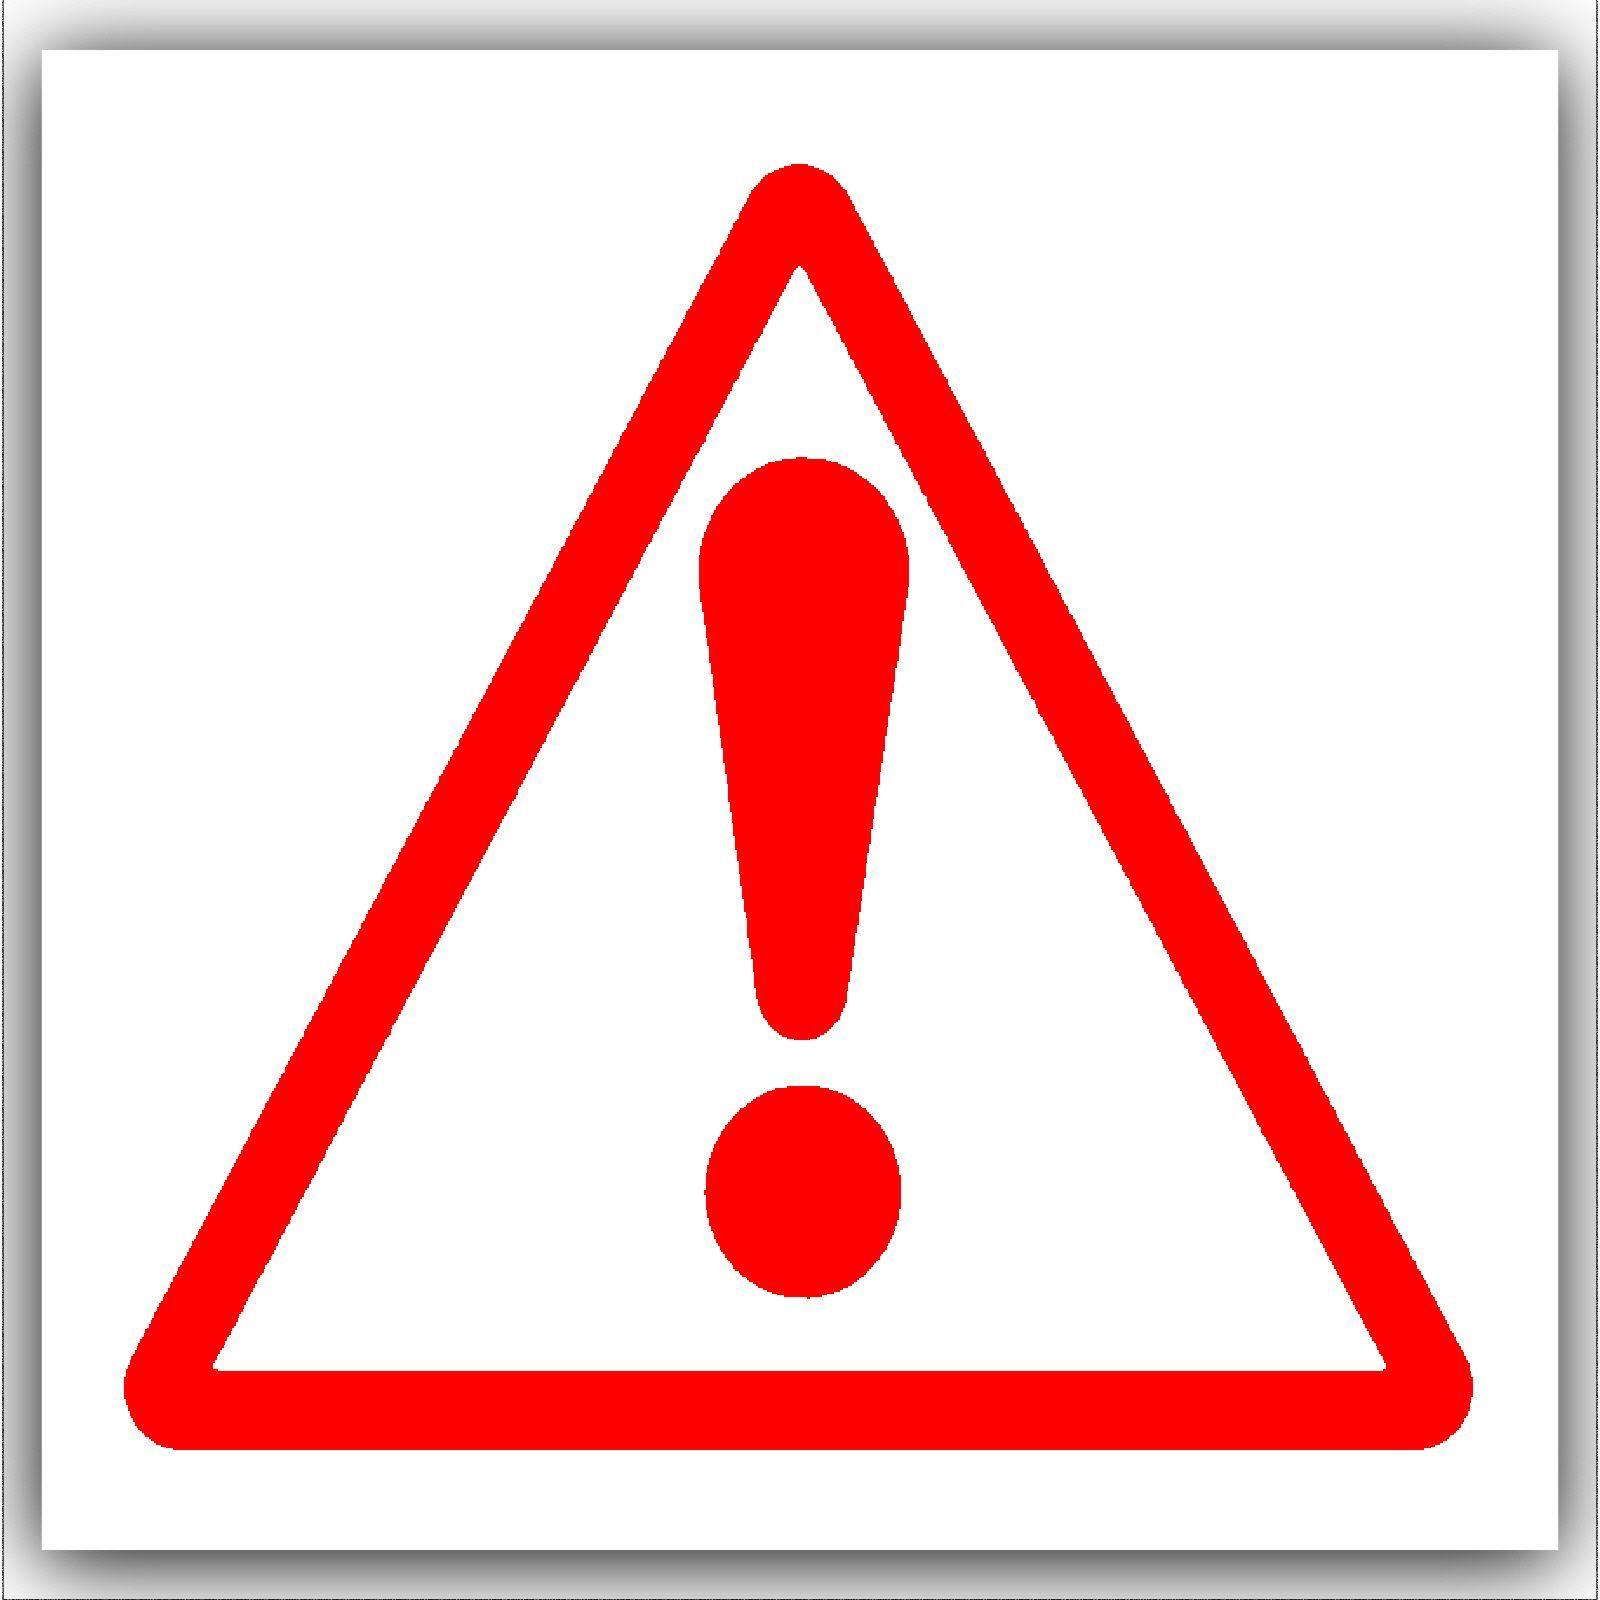 Red White Red Logo - 1 x Caution Warning Danger Symbol-Red on White External Self ...